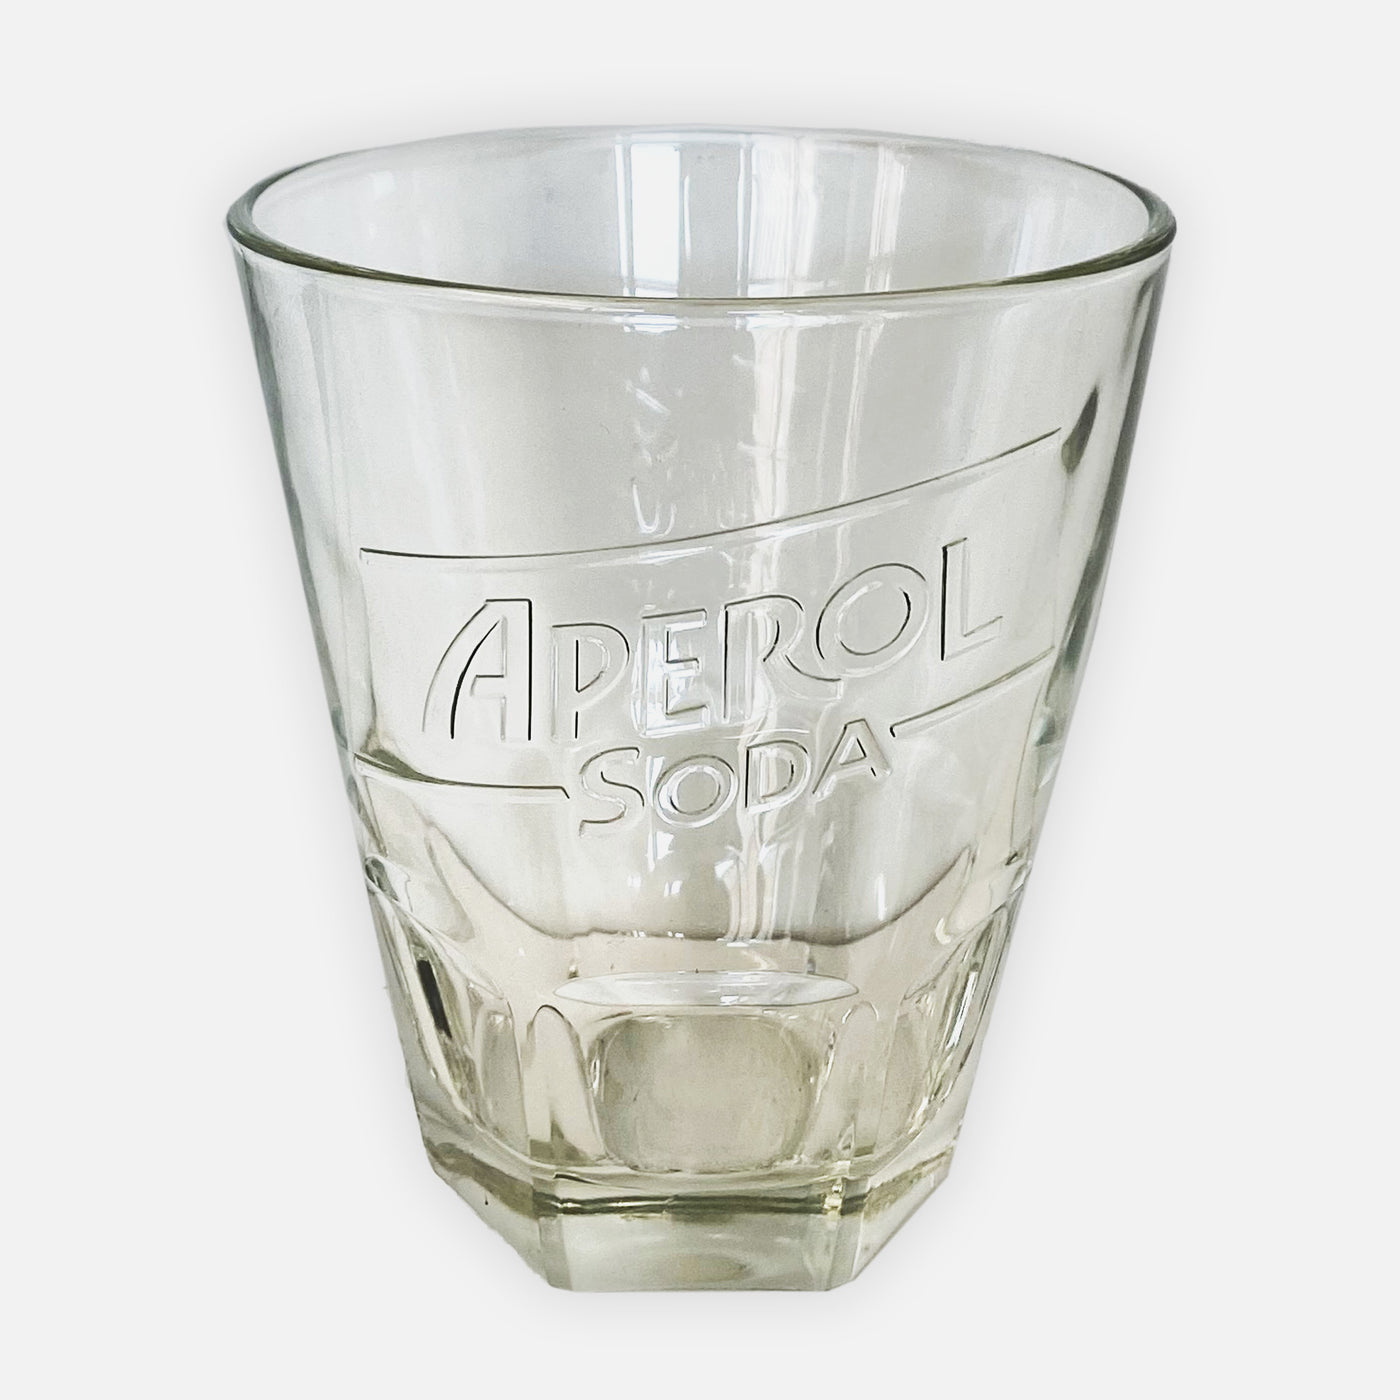 Aperol Aperitif 15% + 6 stemmed glasses set - Apérol